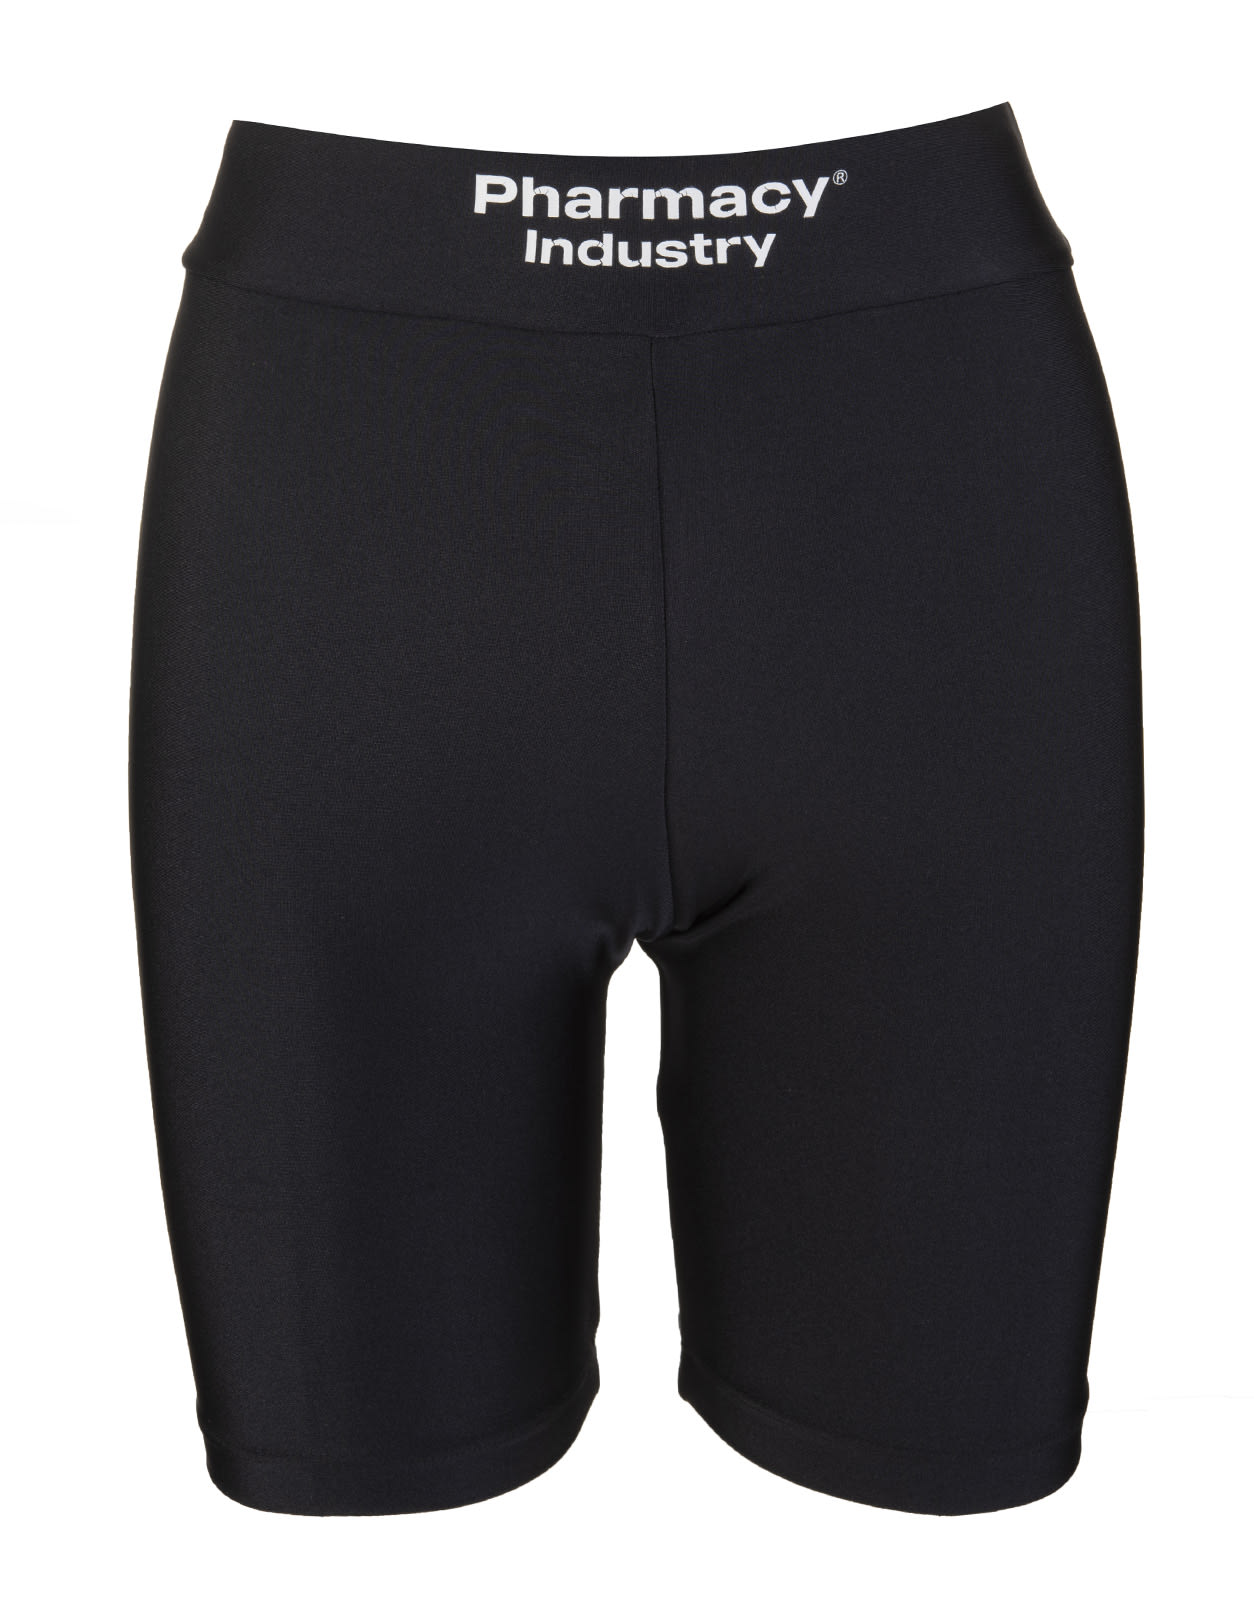 Pharmacy Industry Woman Black Short Sports Leggings With Logo